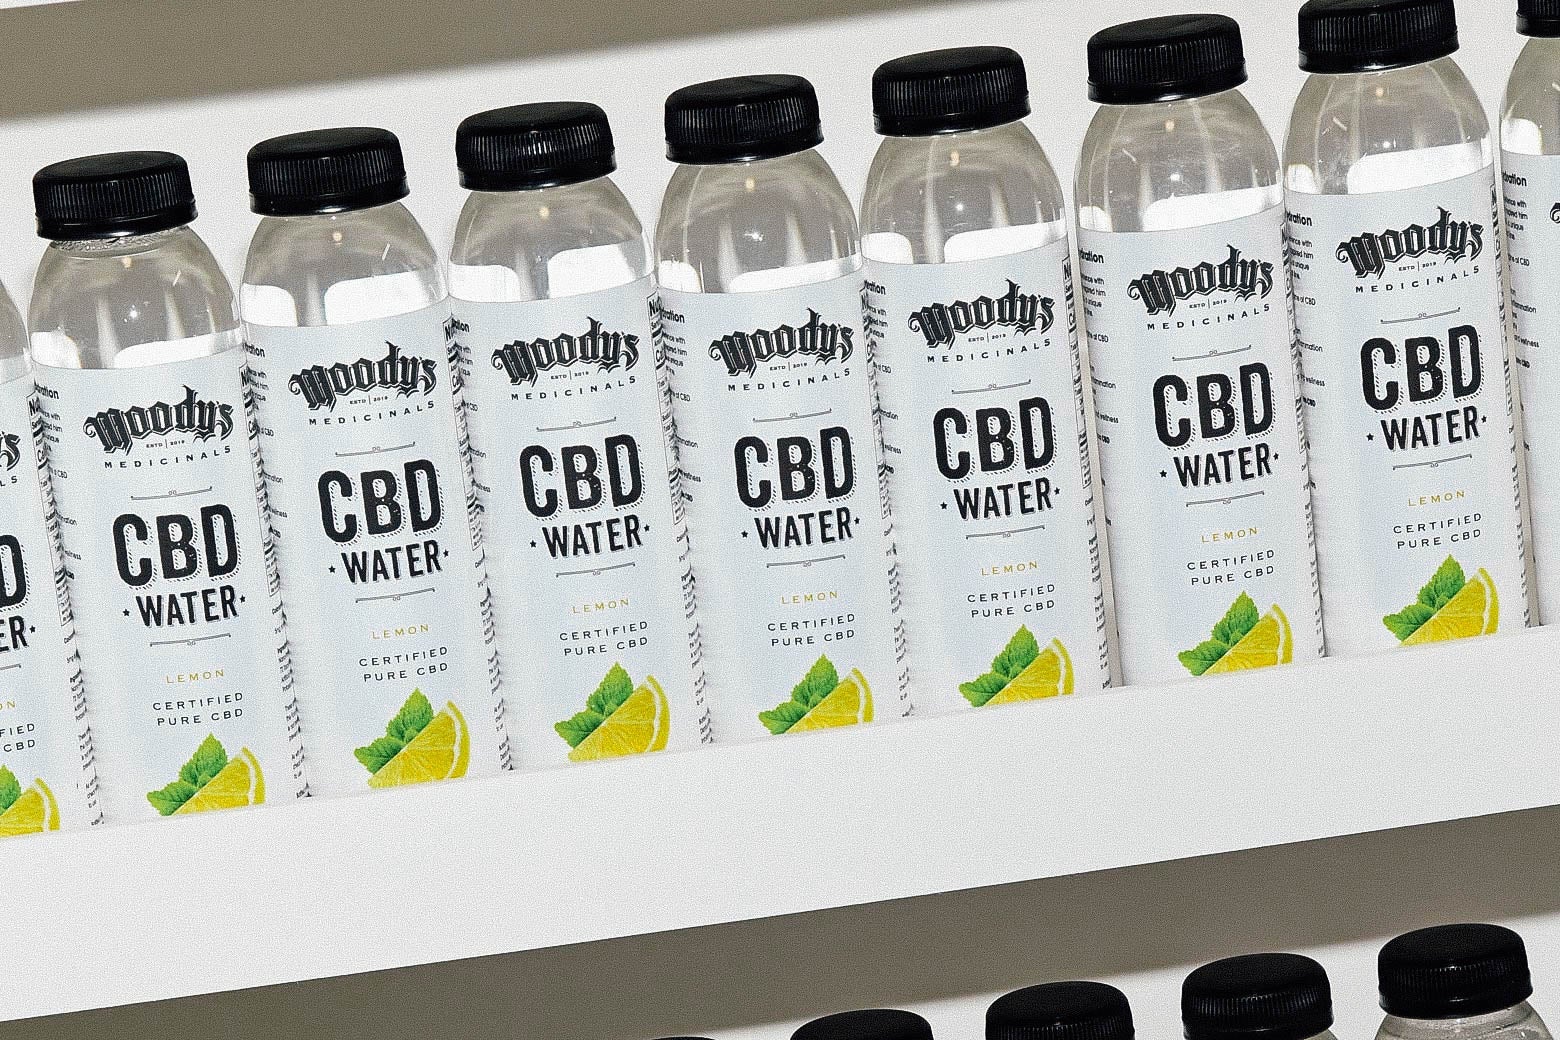 Bottles of Moody's Medicinals CBD water